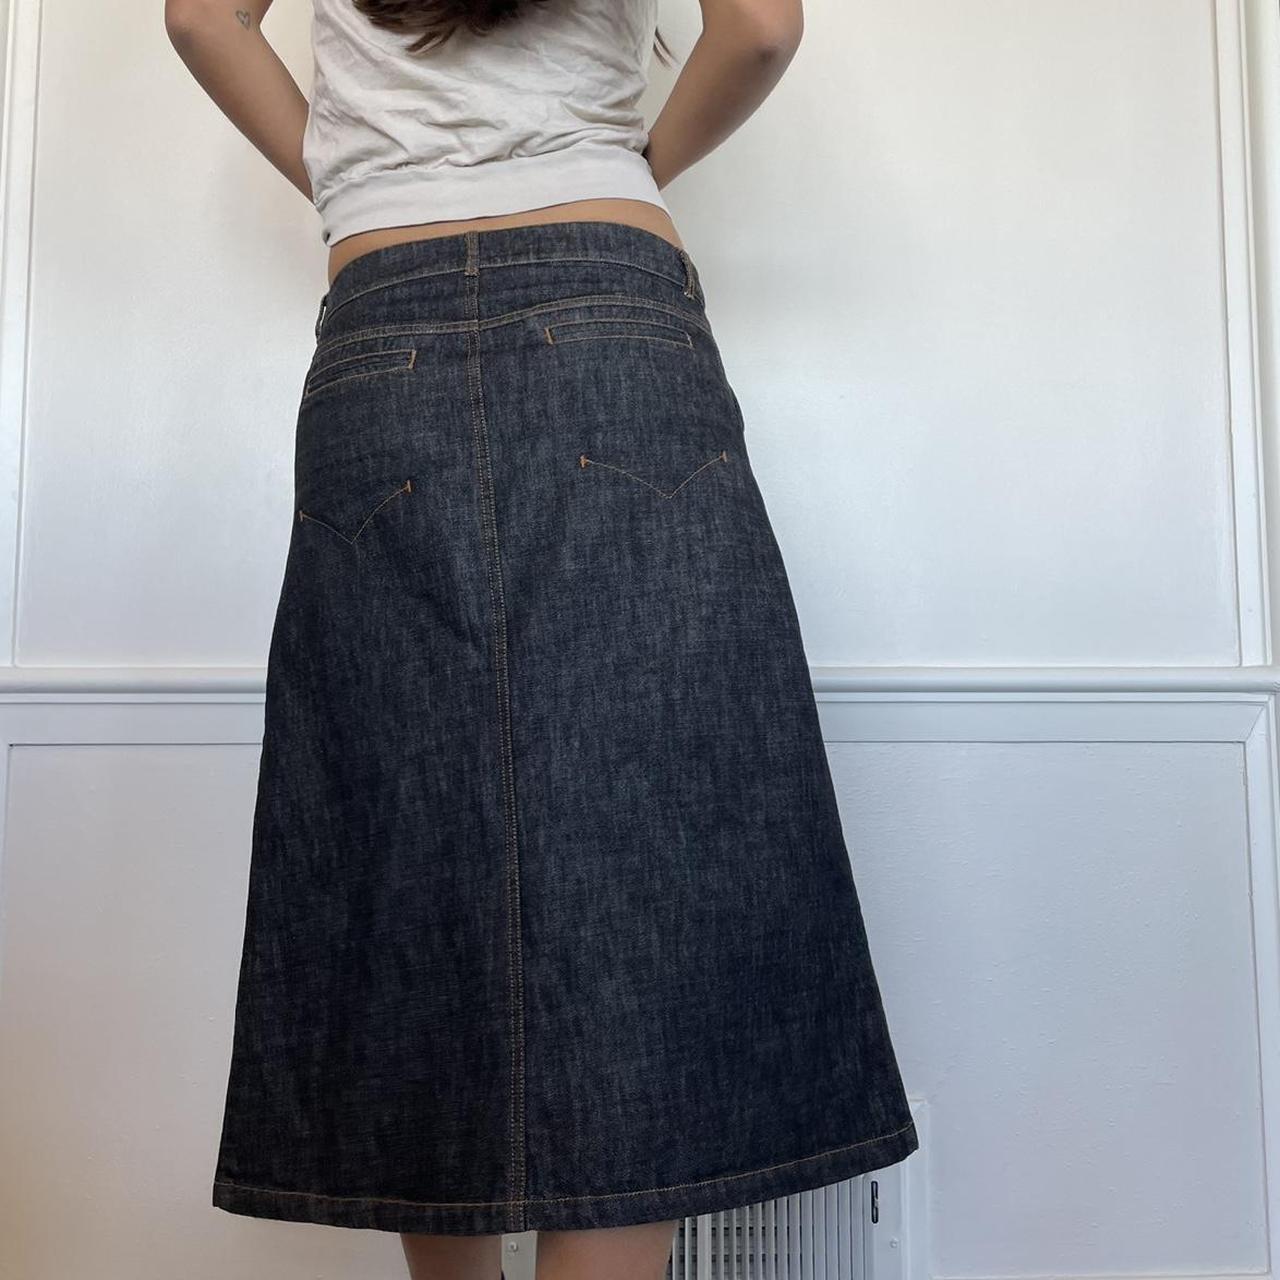 Product Image 2 - Amazing dark wash denim skirt!!